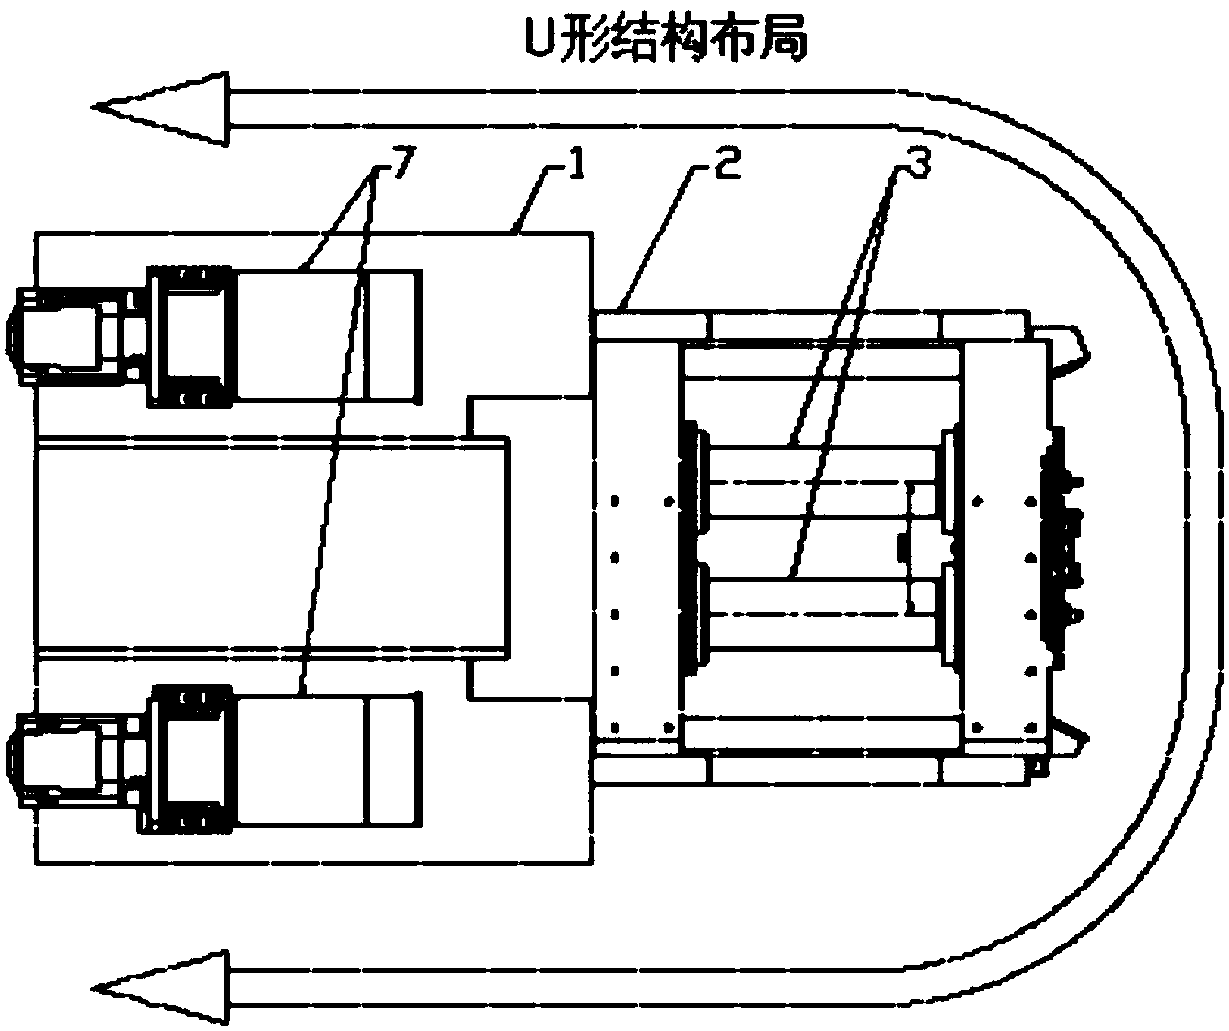 U-shaped short wheelbase high-speed and high-efficiency multi-wire cutting method